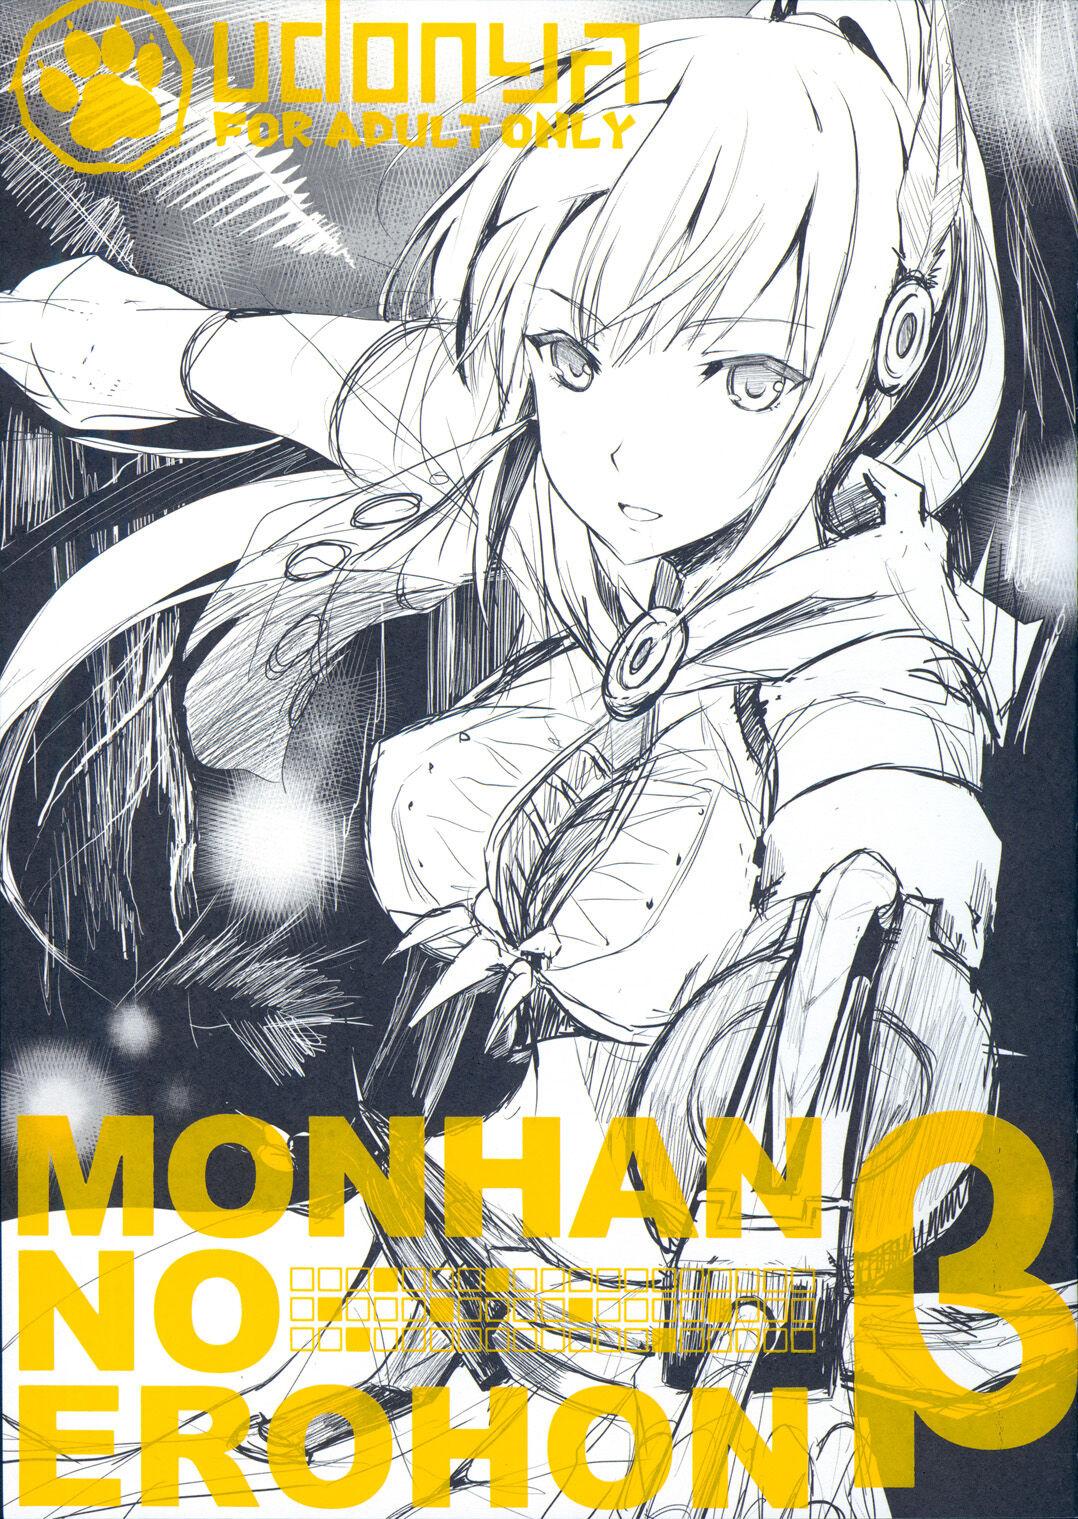 Stepbrother Monhan no Erohon β - Monster hunter White - Page 3